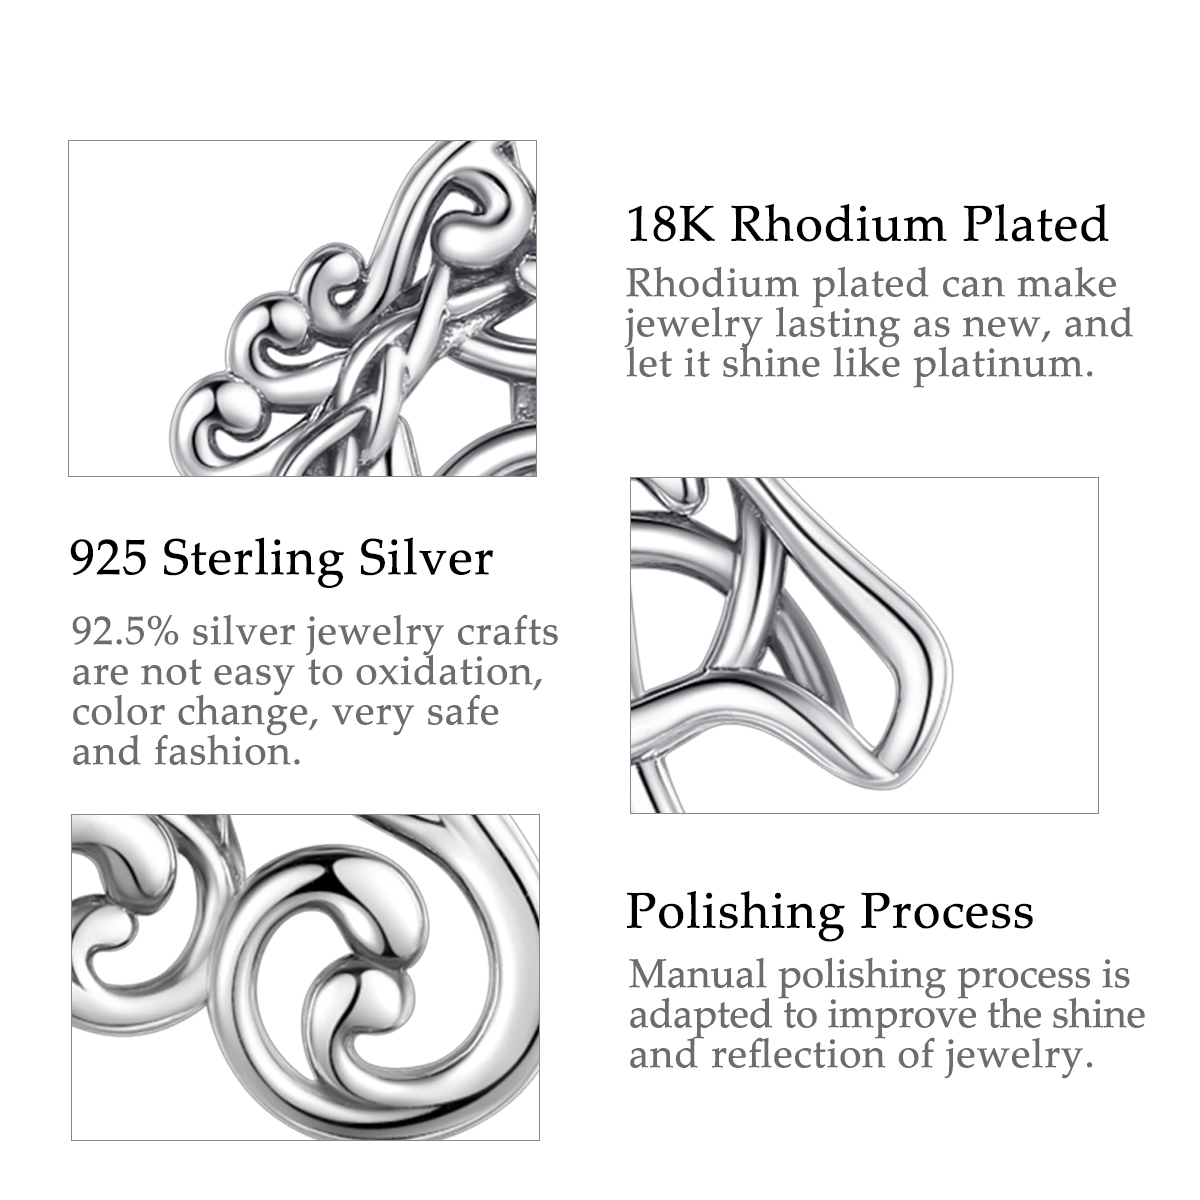 S925 Sterling Silver Vintage Oxidized Celtic Unicorn Horse Head Custom Pendant Necklace